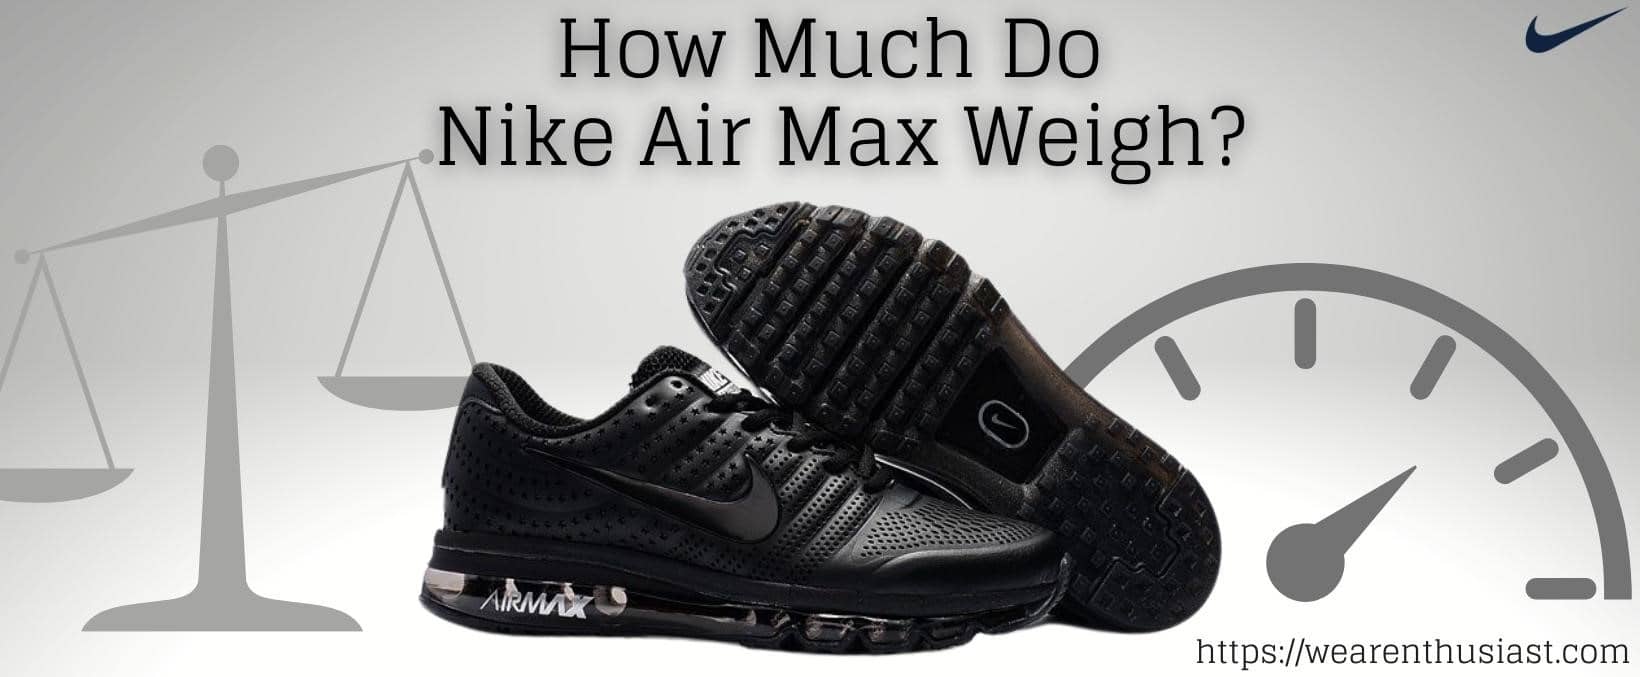 How Much Do Nike Air Max Weigh?